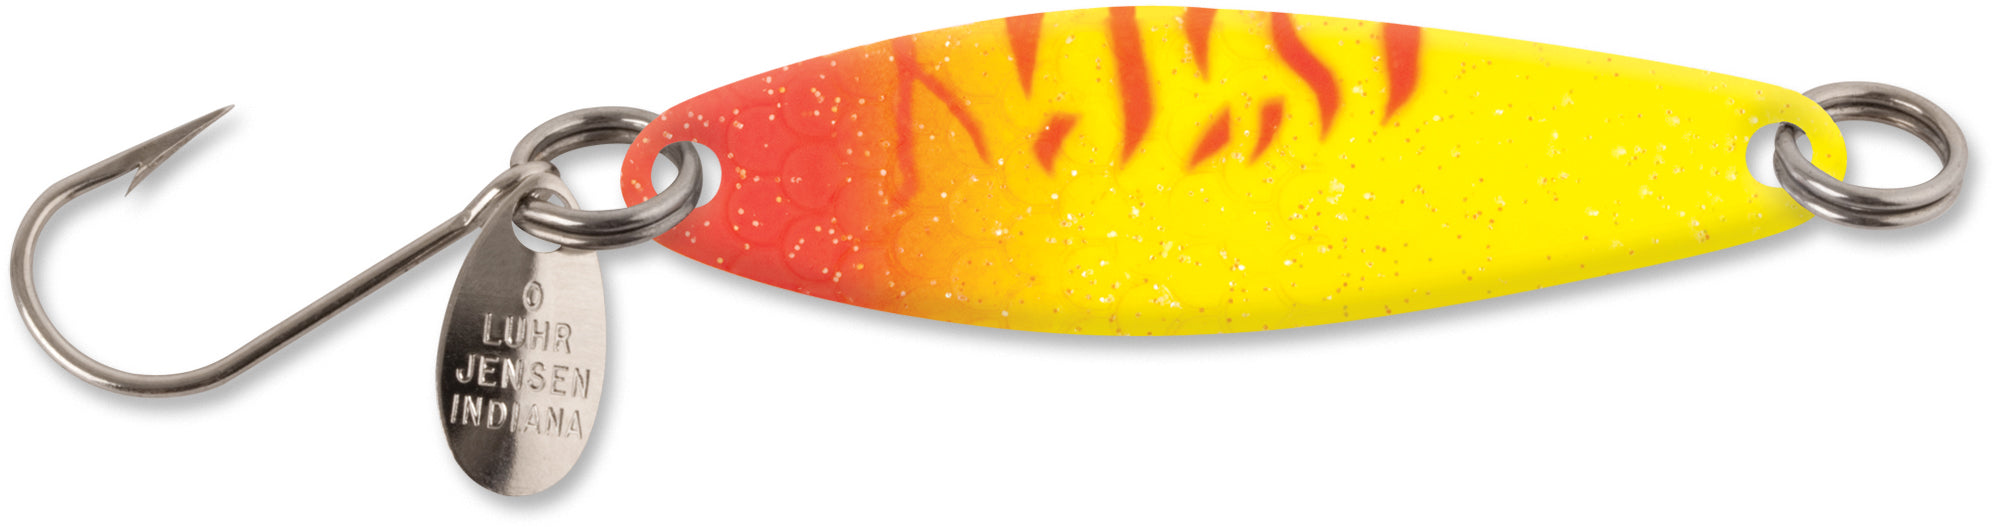 LUHR-JENSEN 1051-002-1184 Fishing Lure, Needlefish, Trolling Spoon,  Kokanee, Trout, Shiny/Watermelon/Yellow Lure